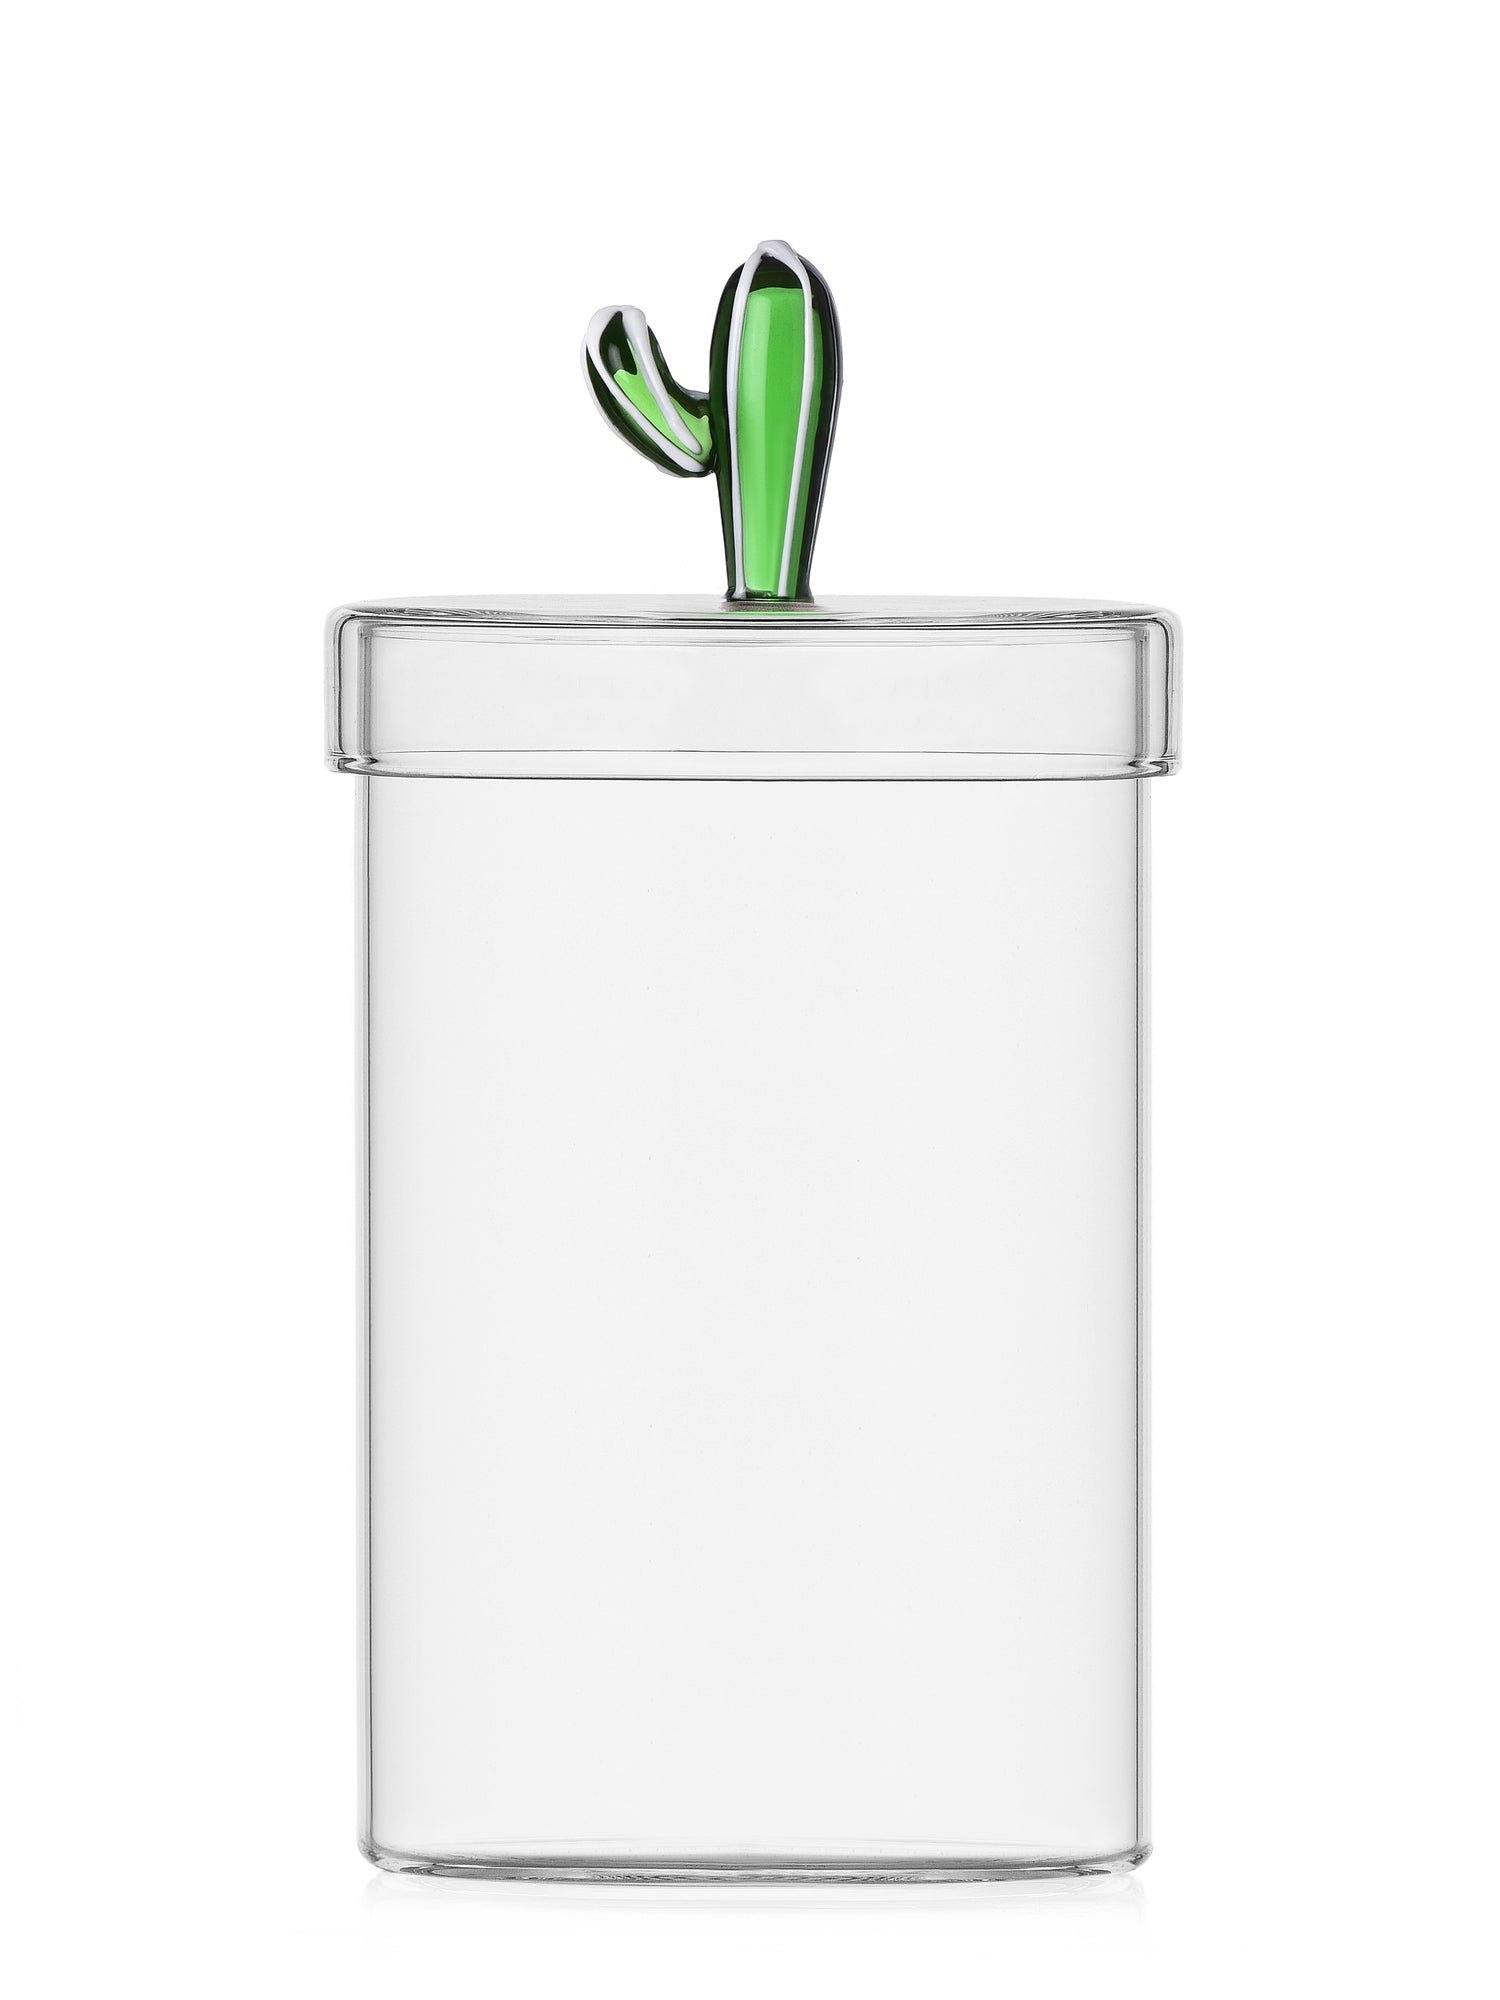 Cactus Box, Desert Plants Collection